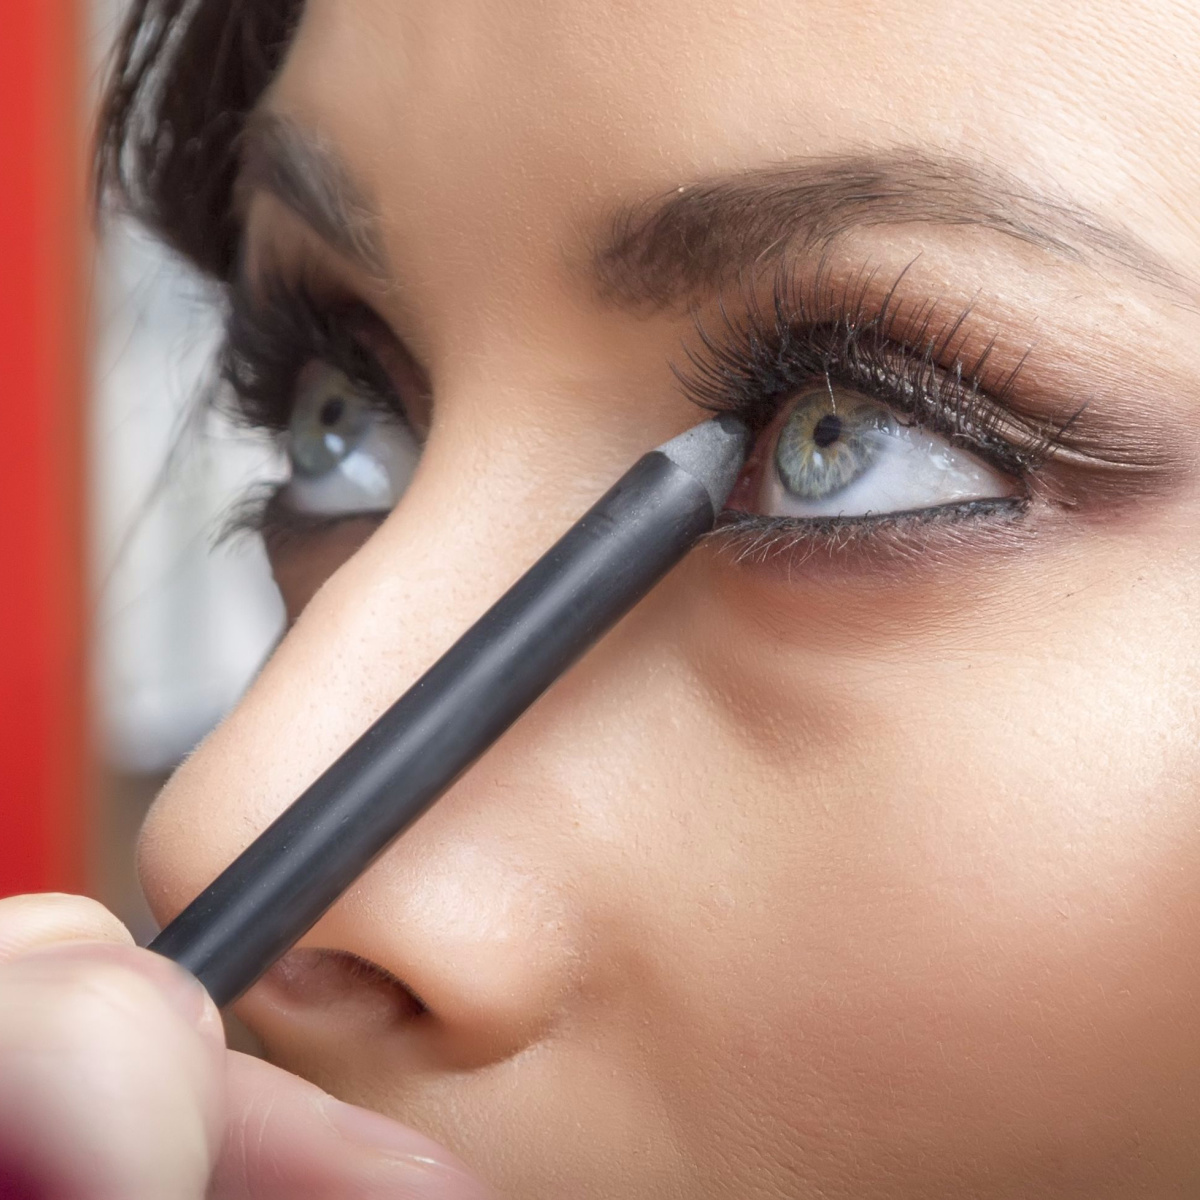 woman applying gray eyeliner pencil to waterline